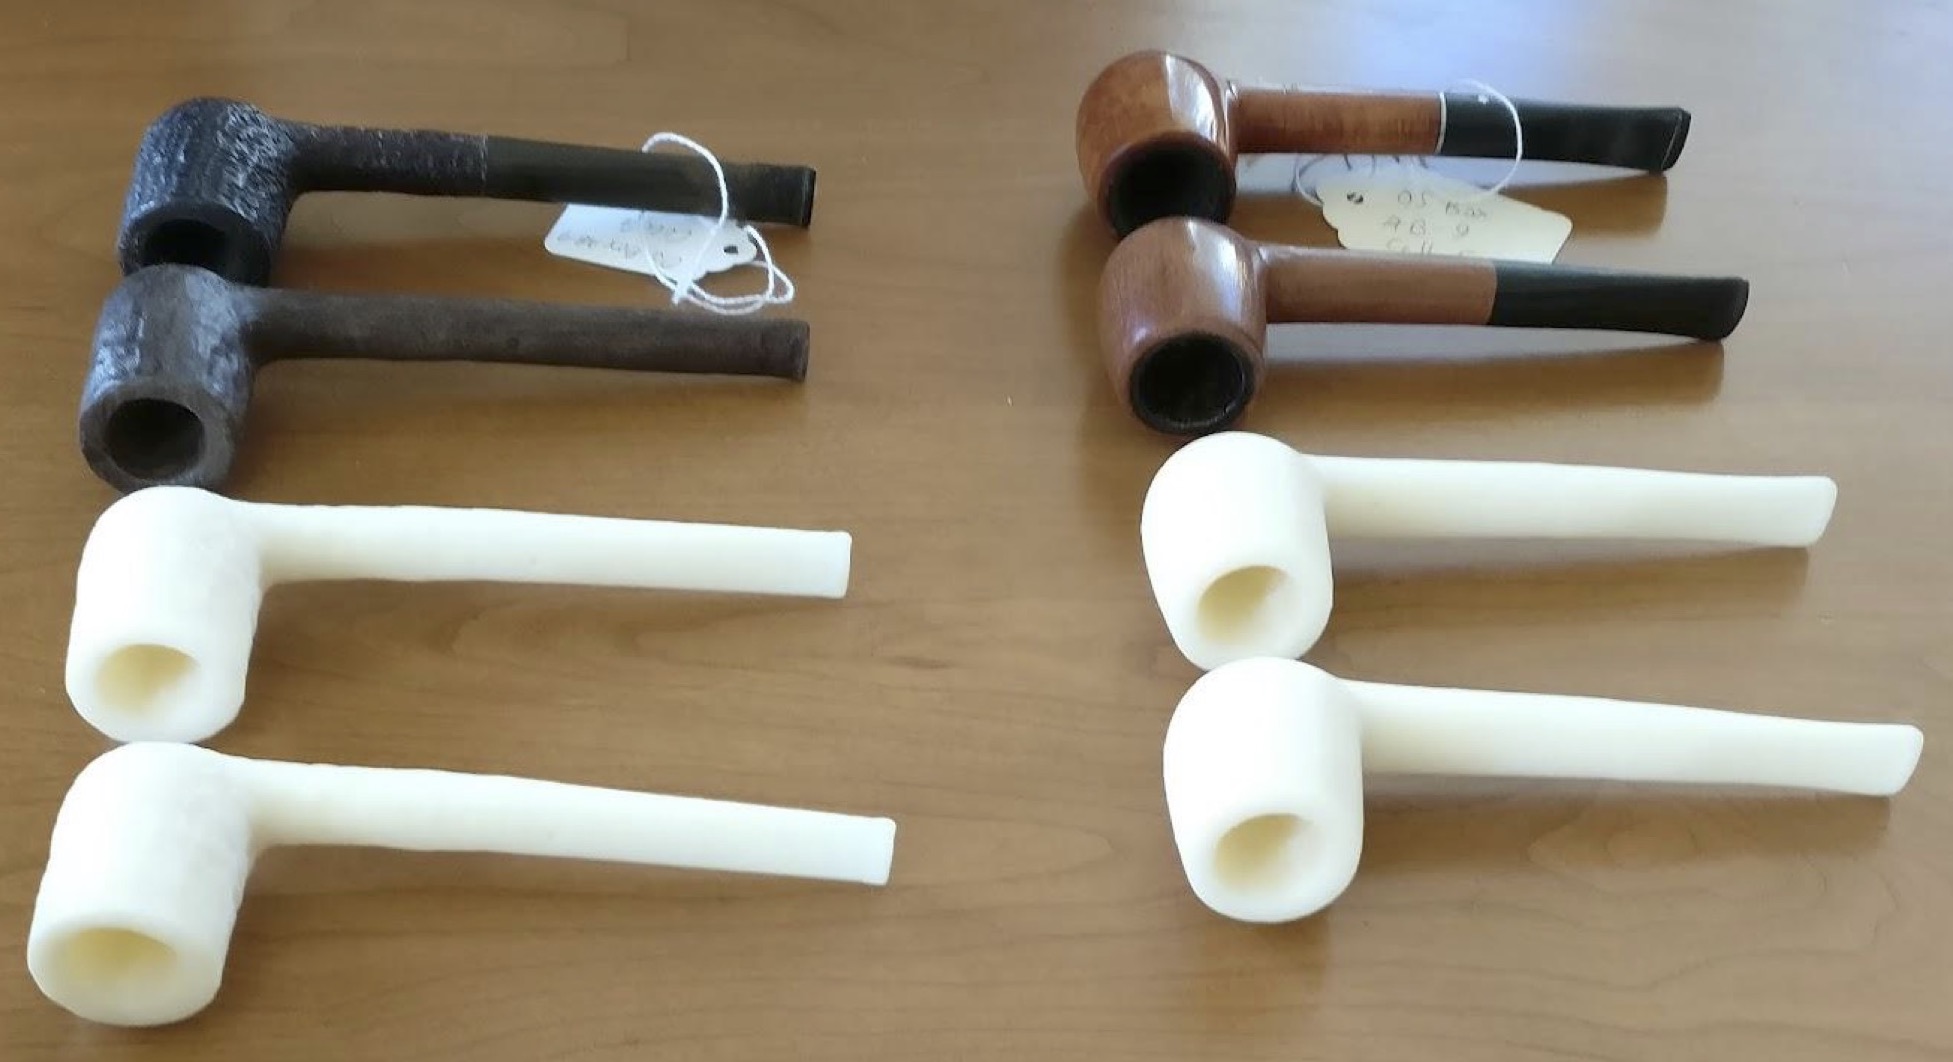 Faulkner pipe and replicas